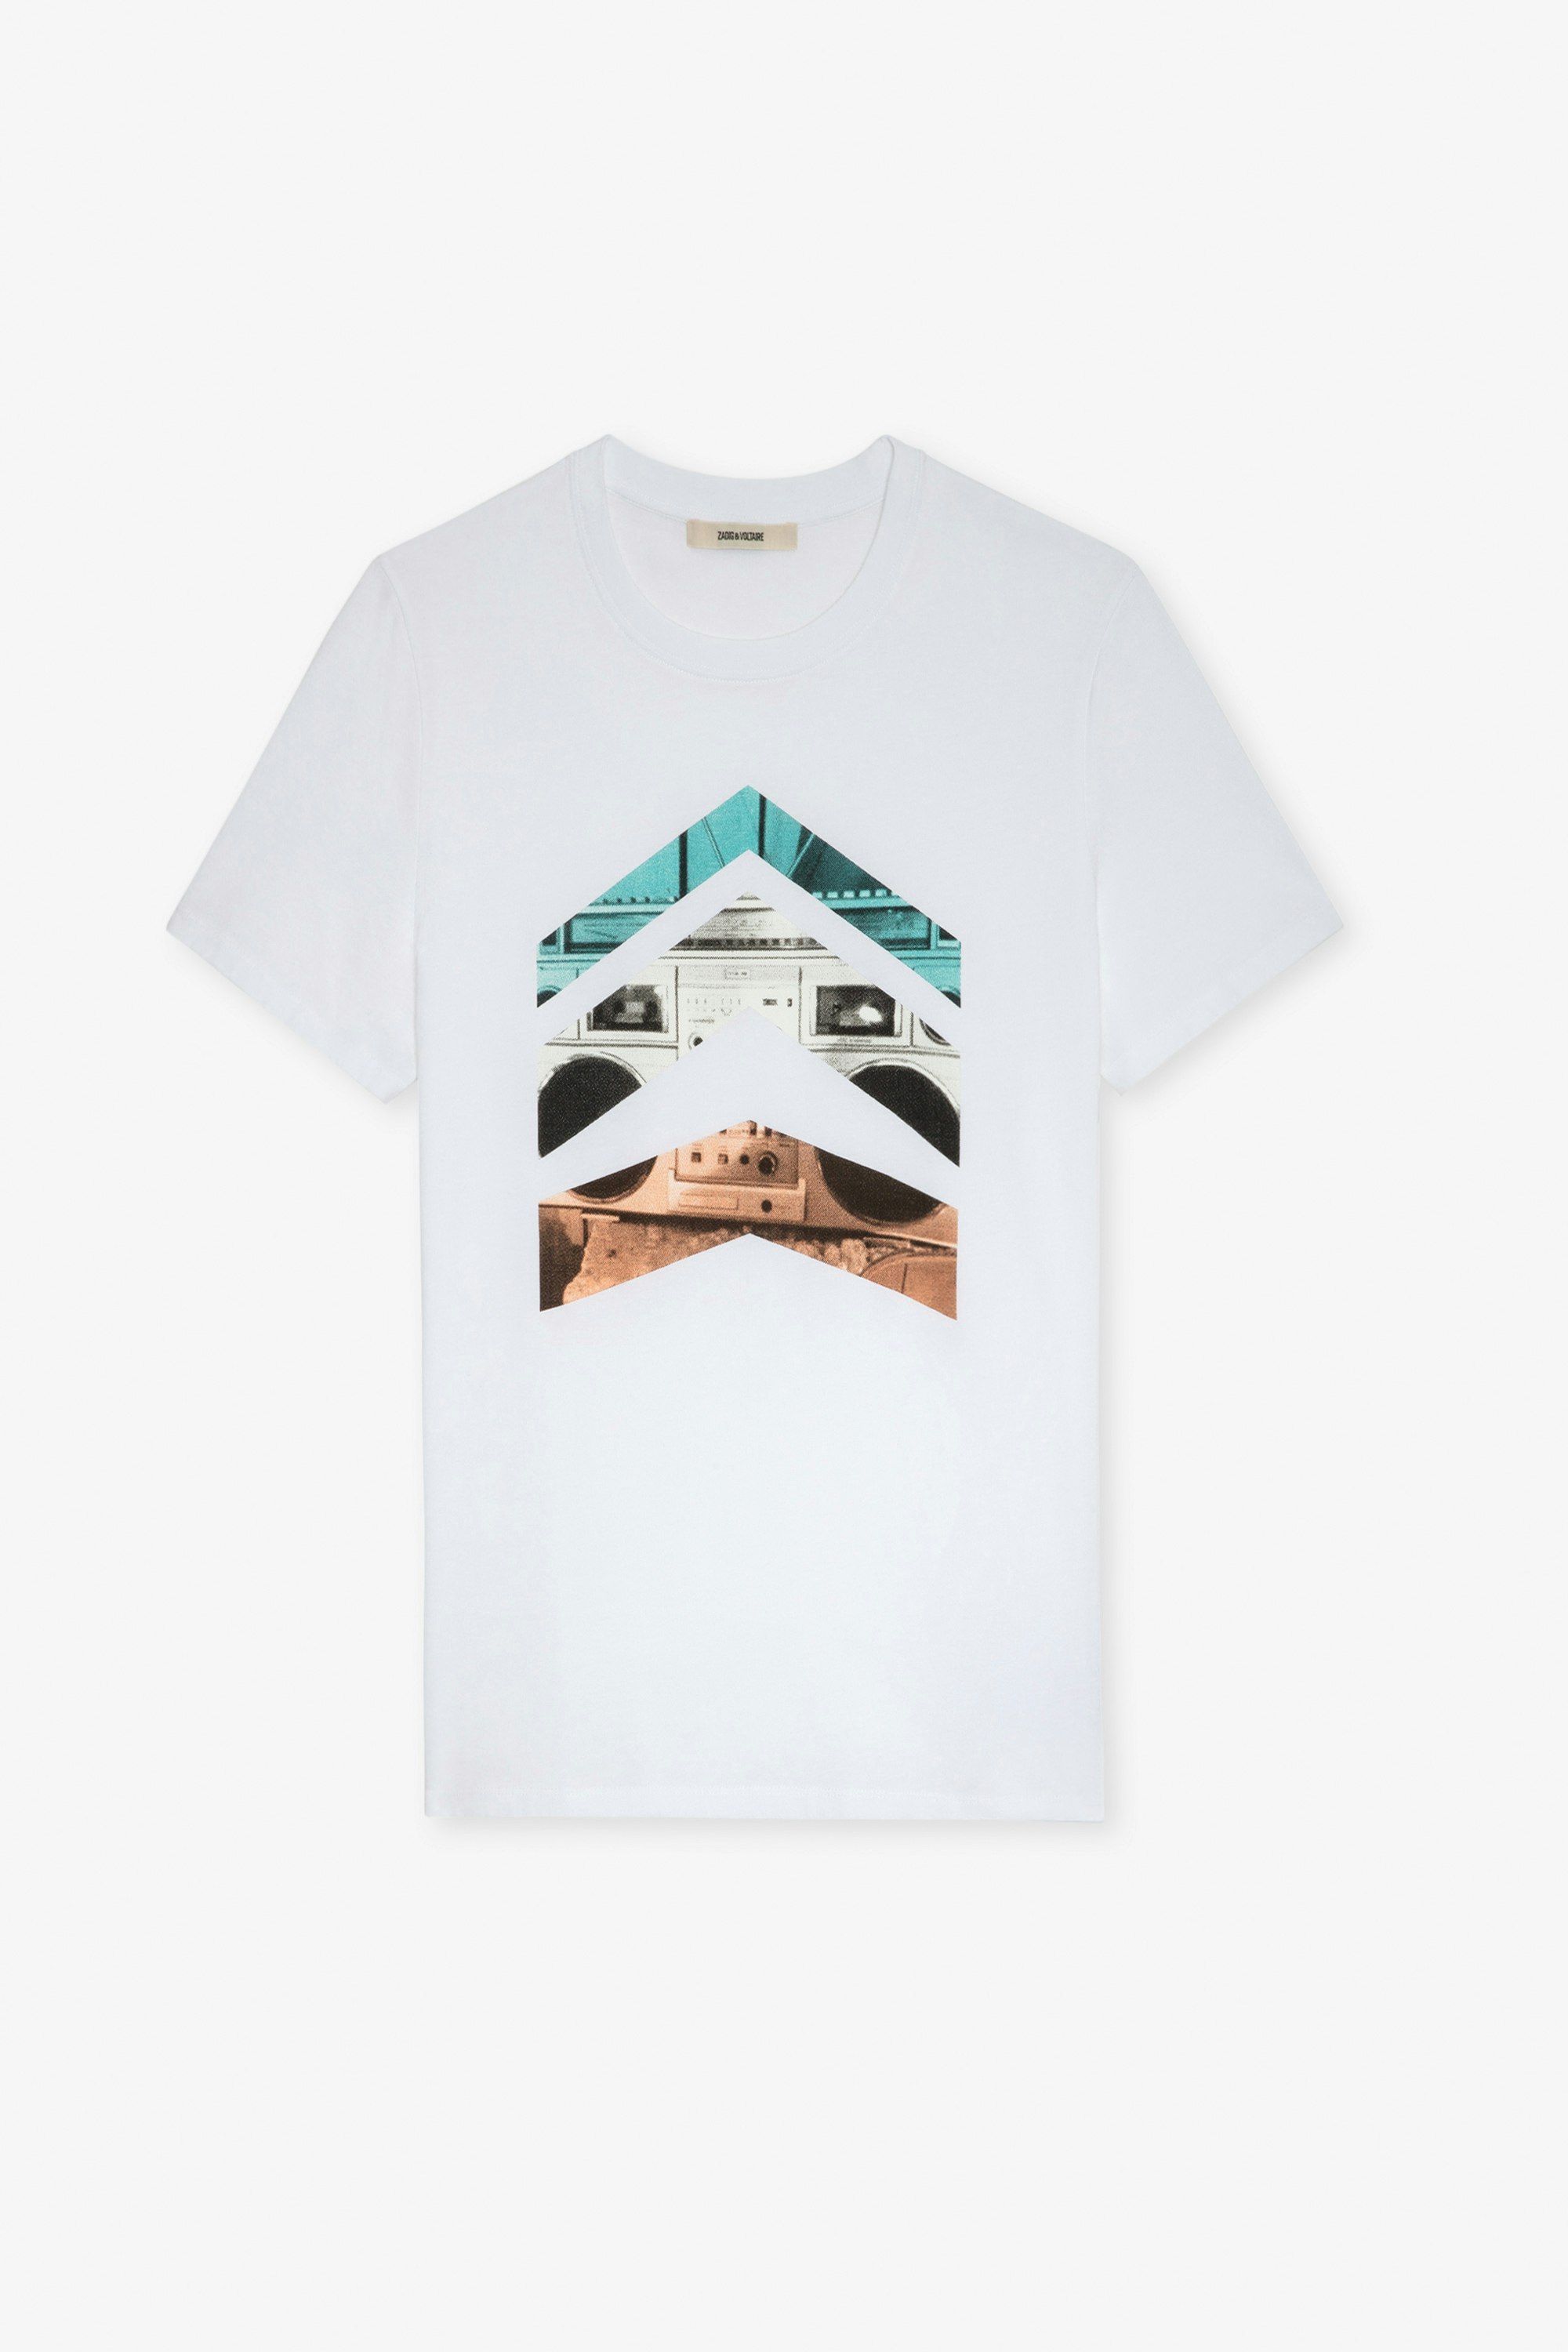 Tommy T-shirt - Men’s white cotton T-shirt with arrow print.